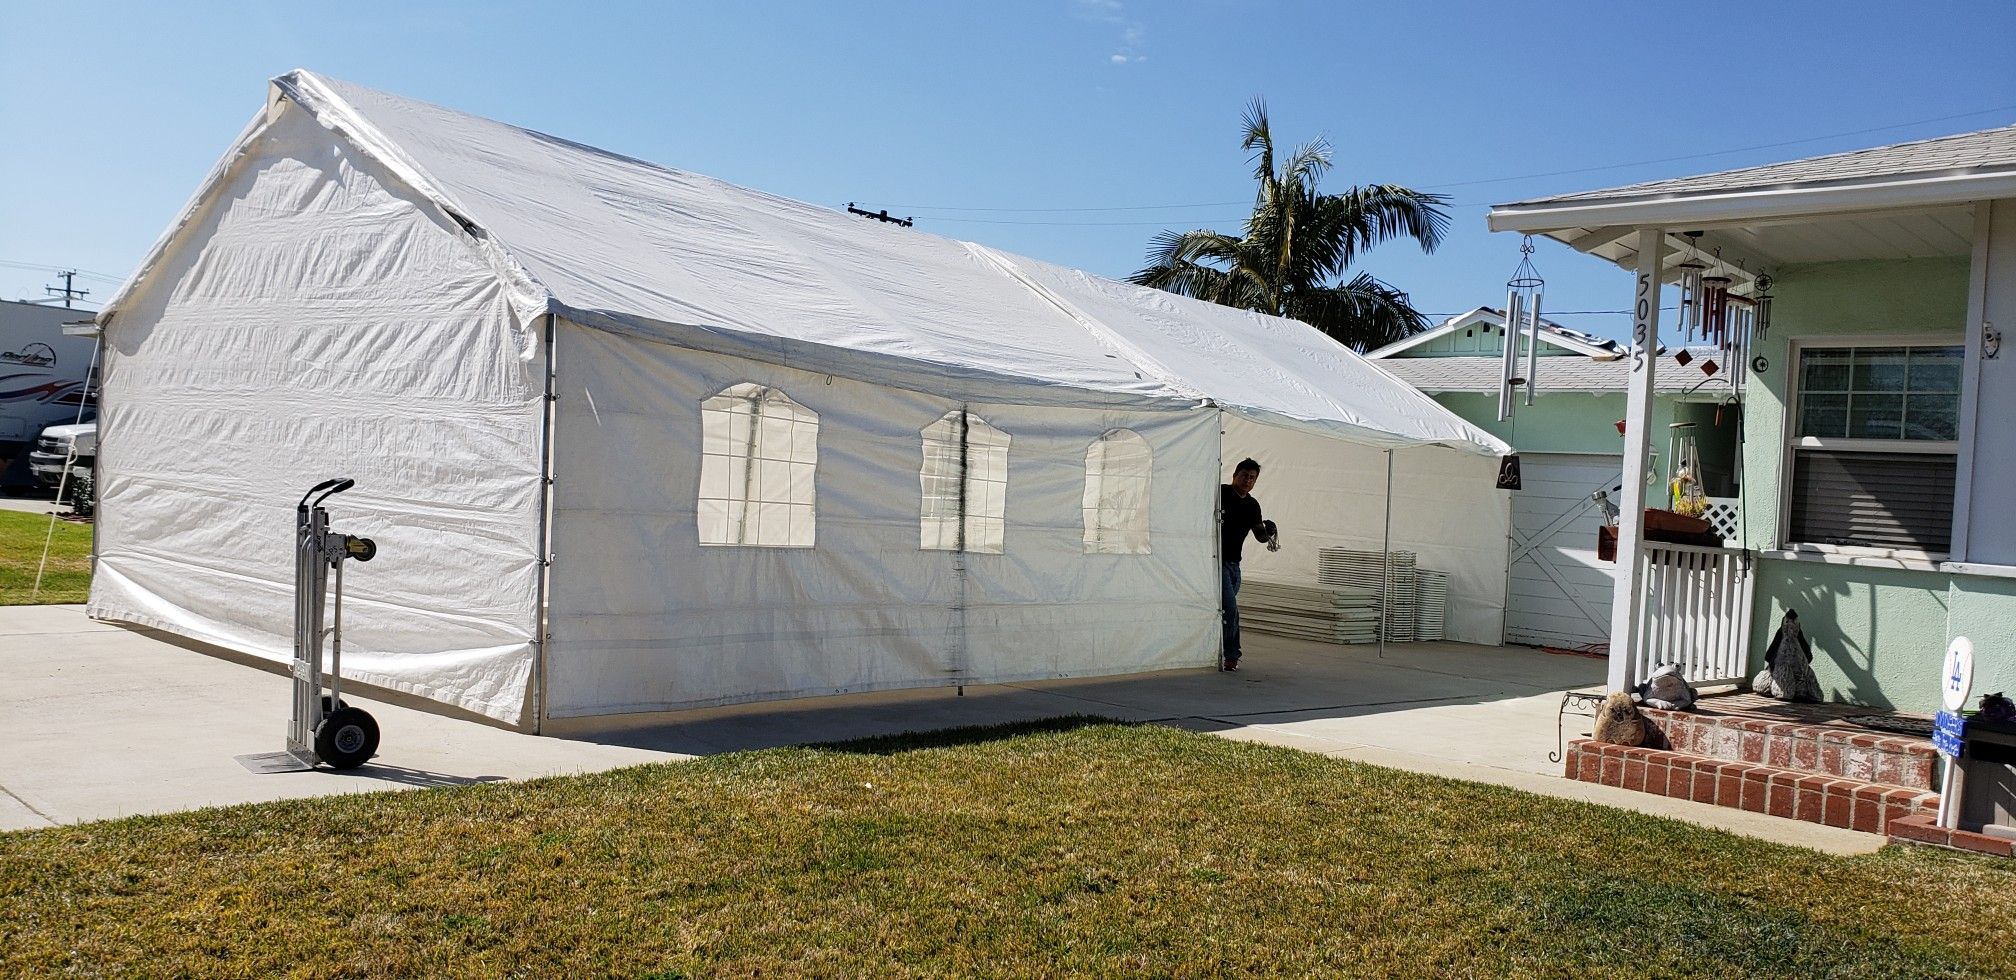 LODGE Camp Tripod for Sale in San Juan Capistrano, CA - OfferUp